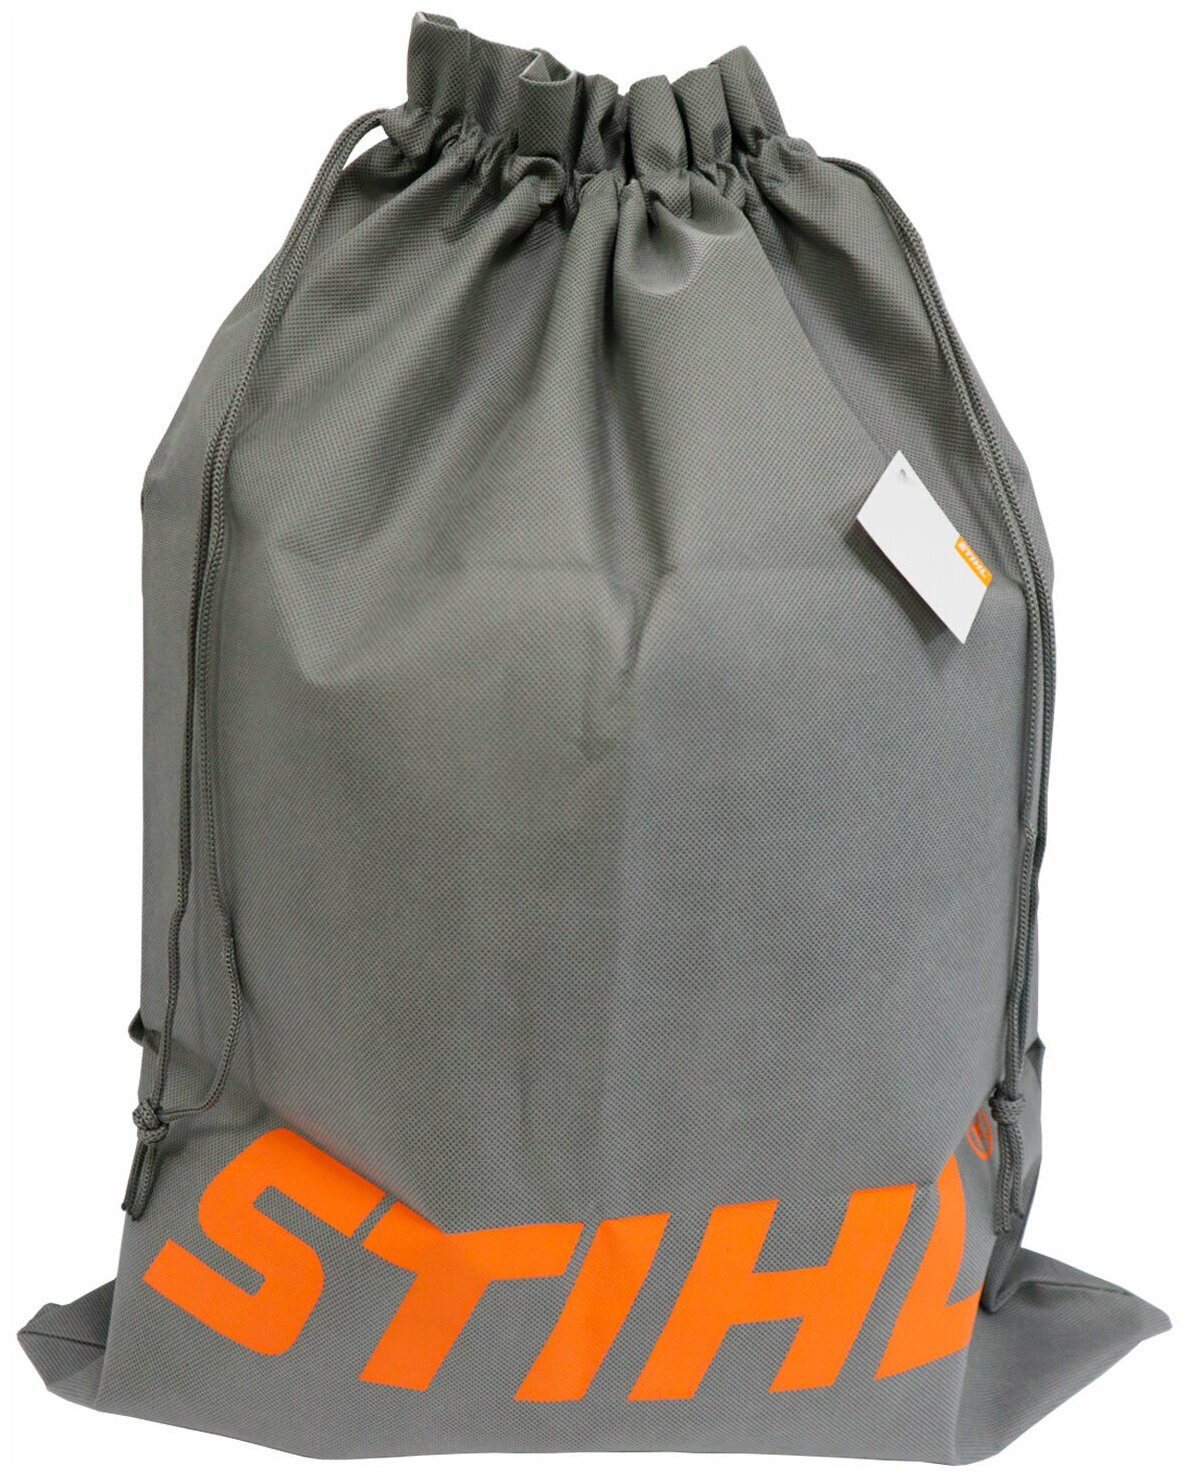 Мешок / сумка для обуви Stihl материал полиэстер цвет серый размеры 34х44 см